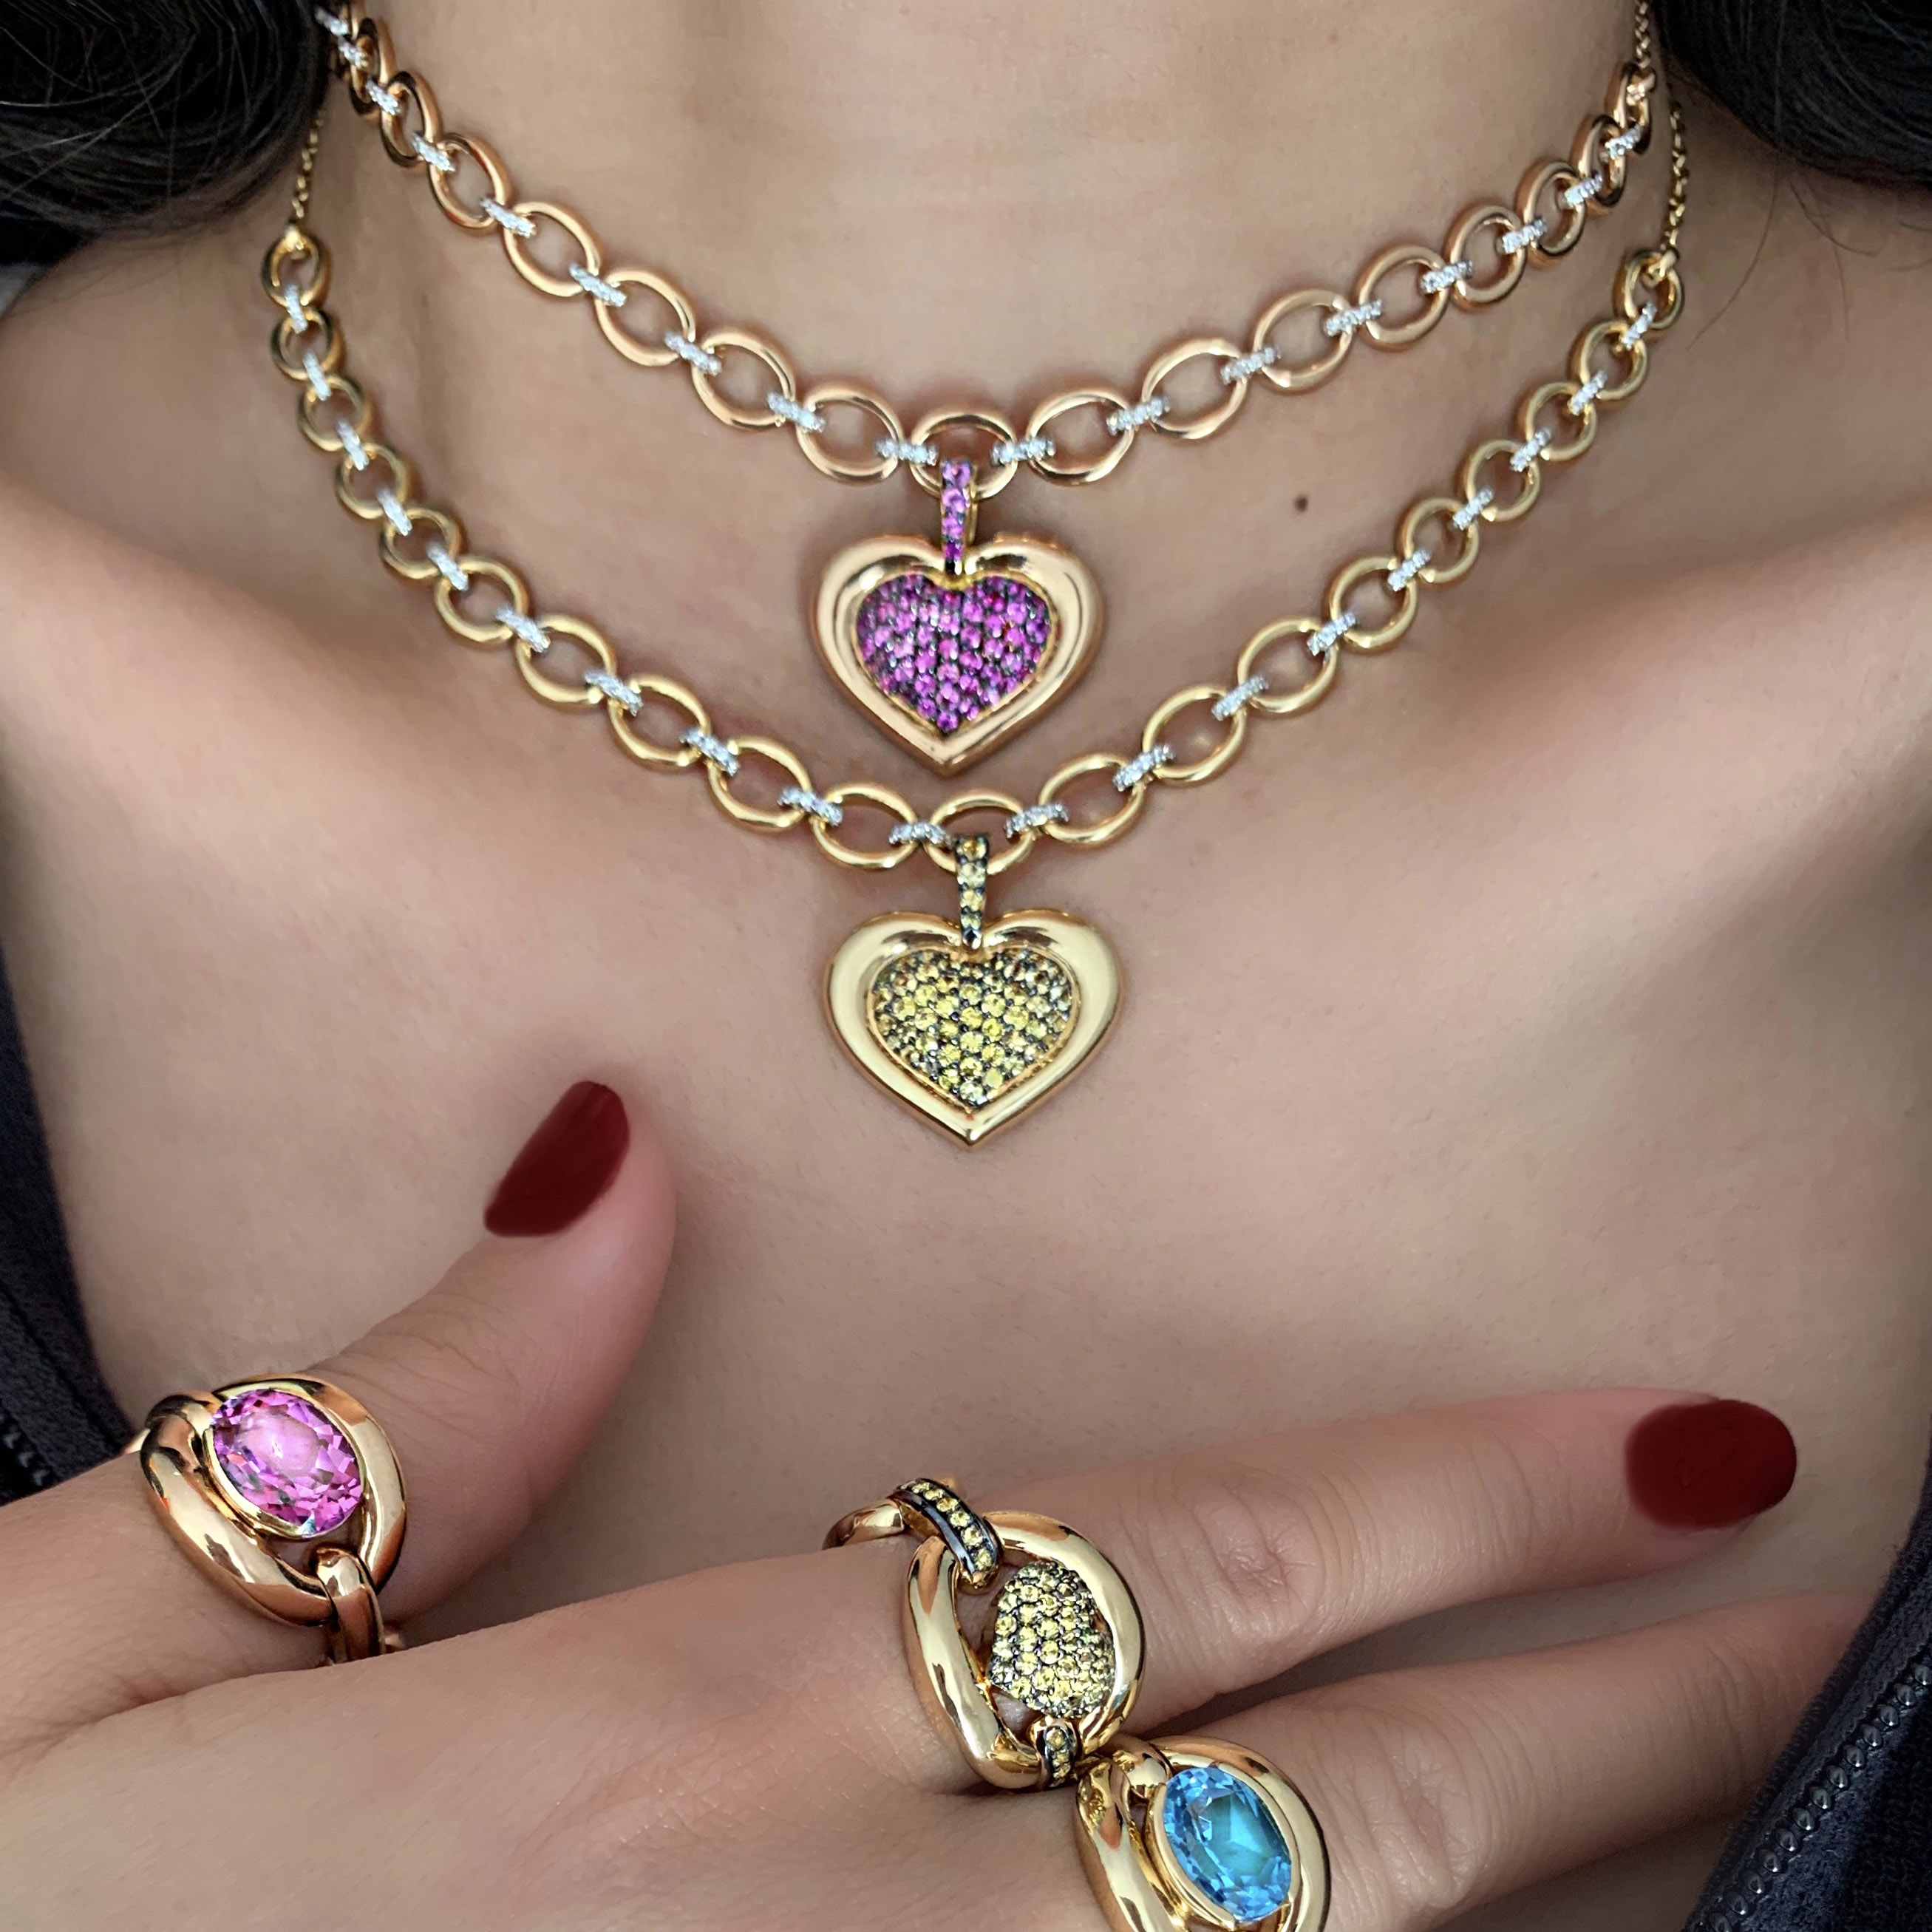 Nadine Aysoy Catena jewellery revealed